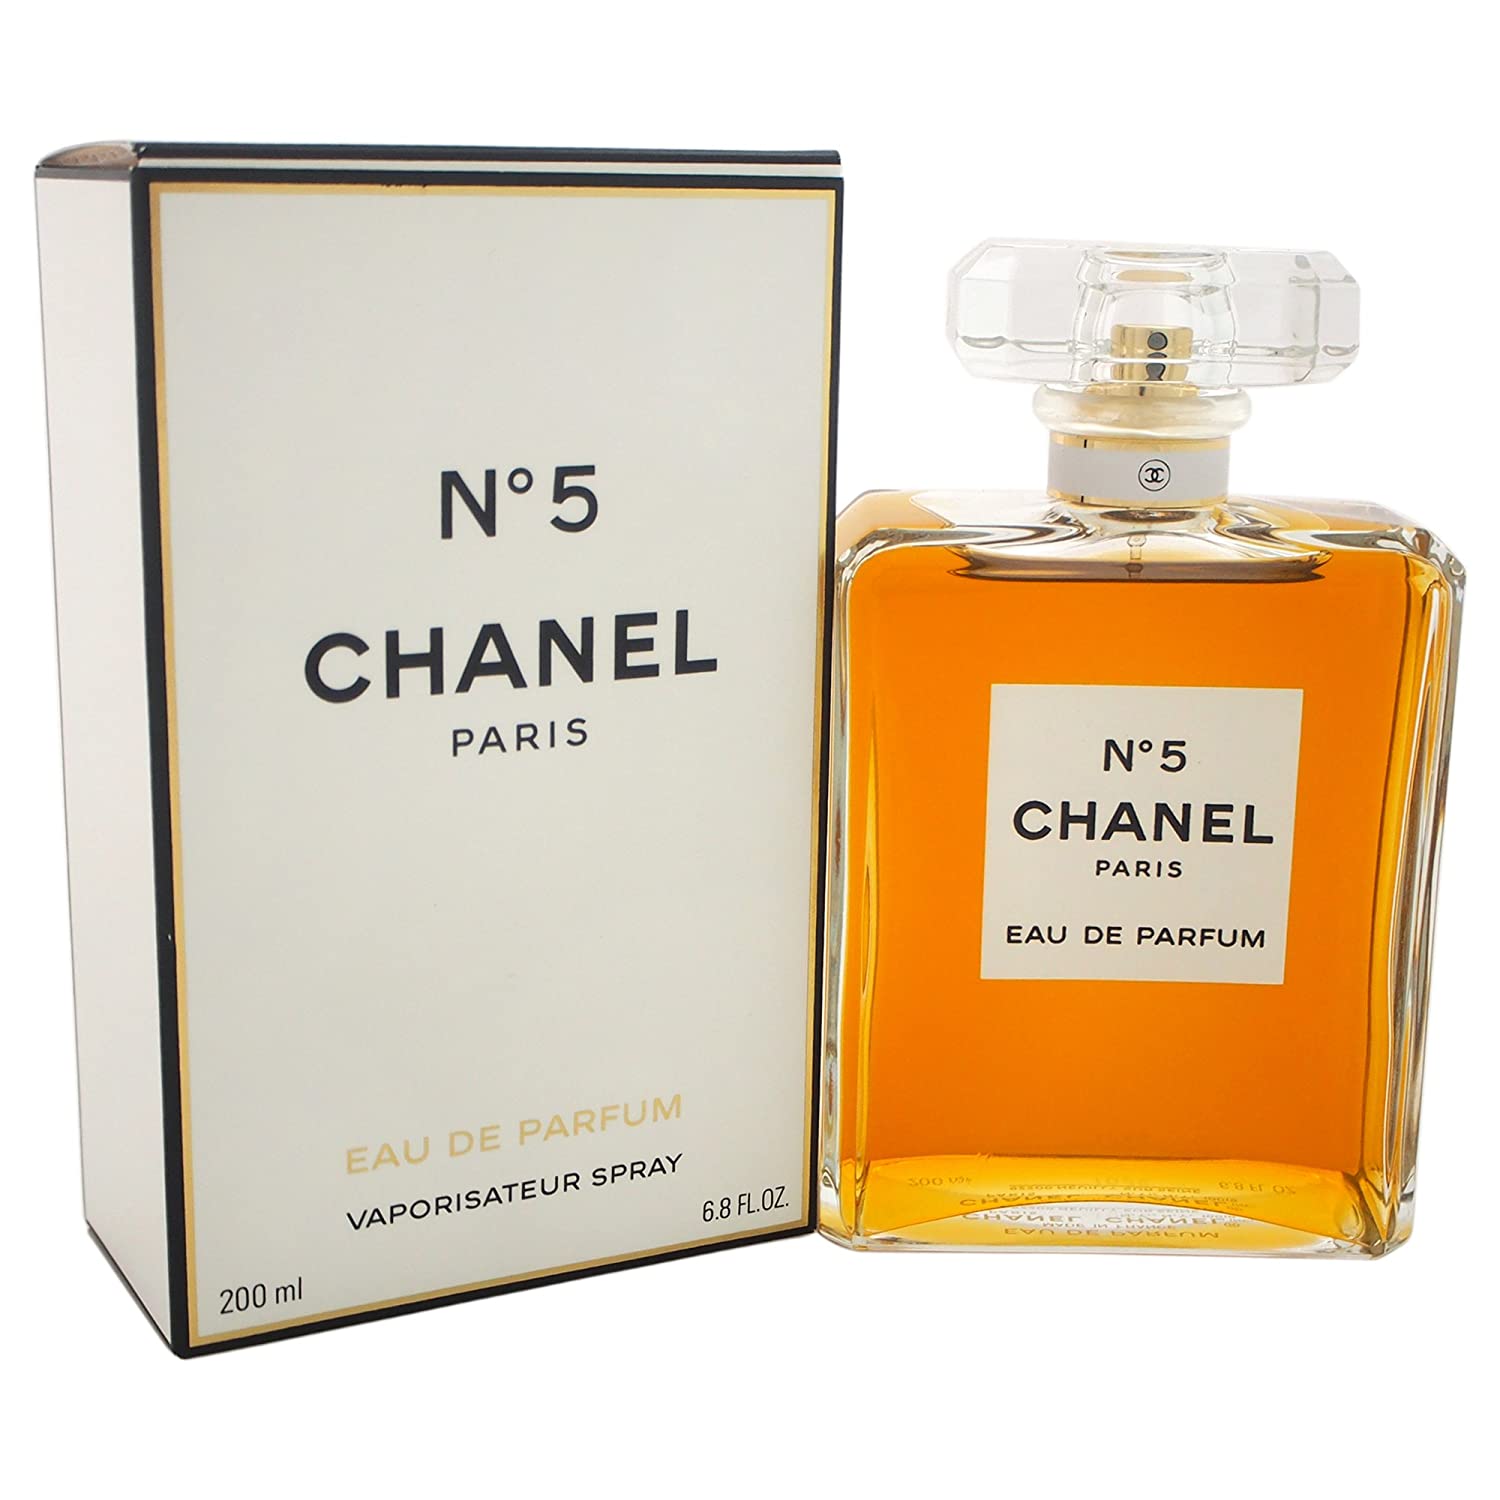 N5 EXTRAIT PERFUME  75 ml  Fragrance  CHANEL